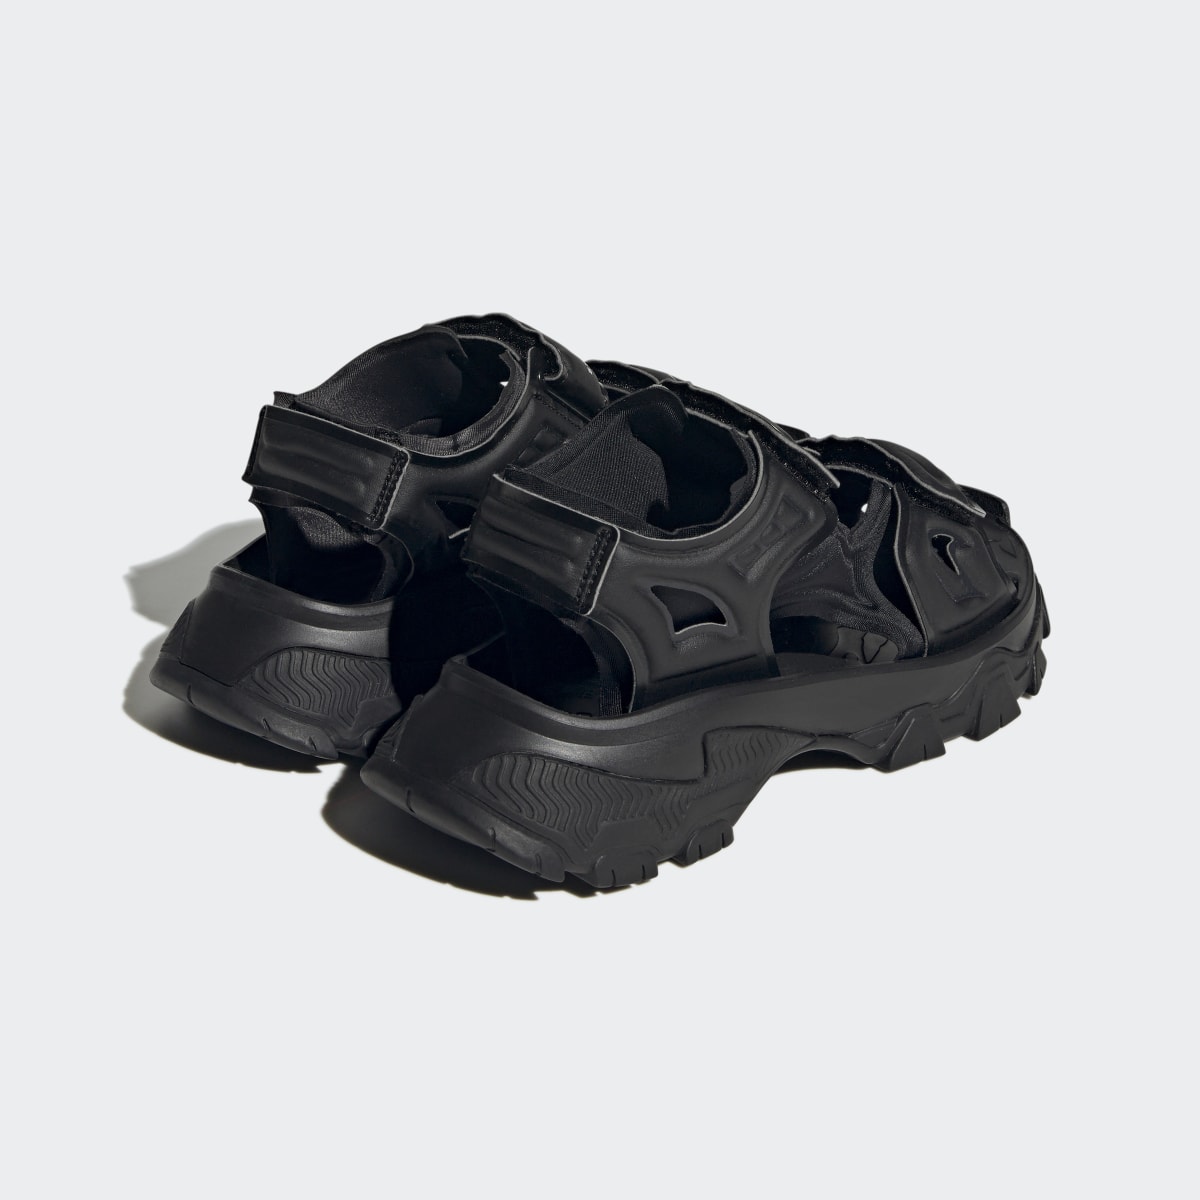 Adidas by Stella McCartney HIKA Outdoor Sandals. 6